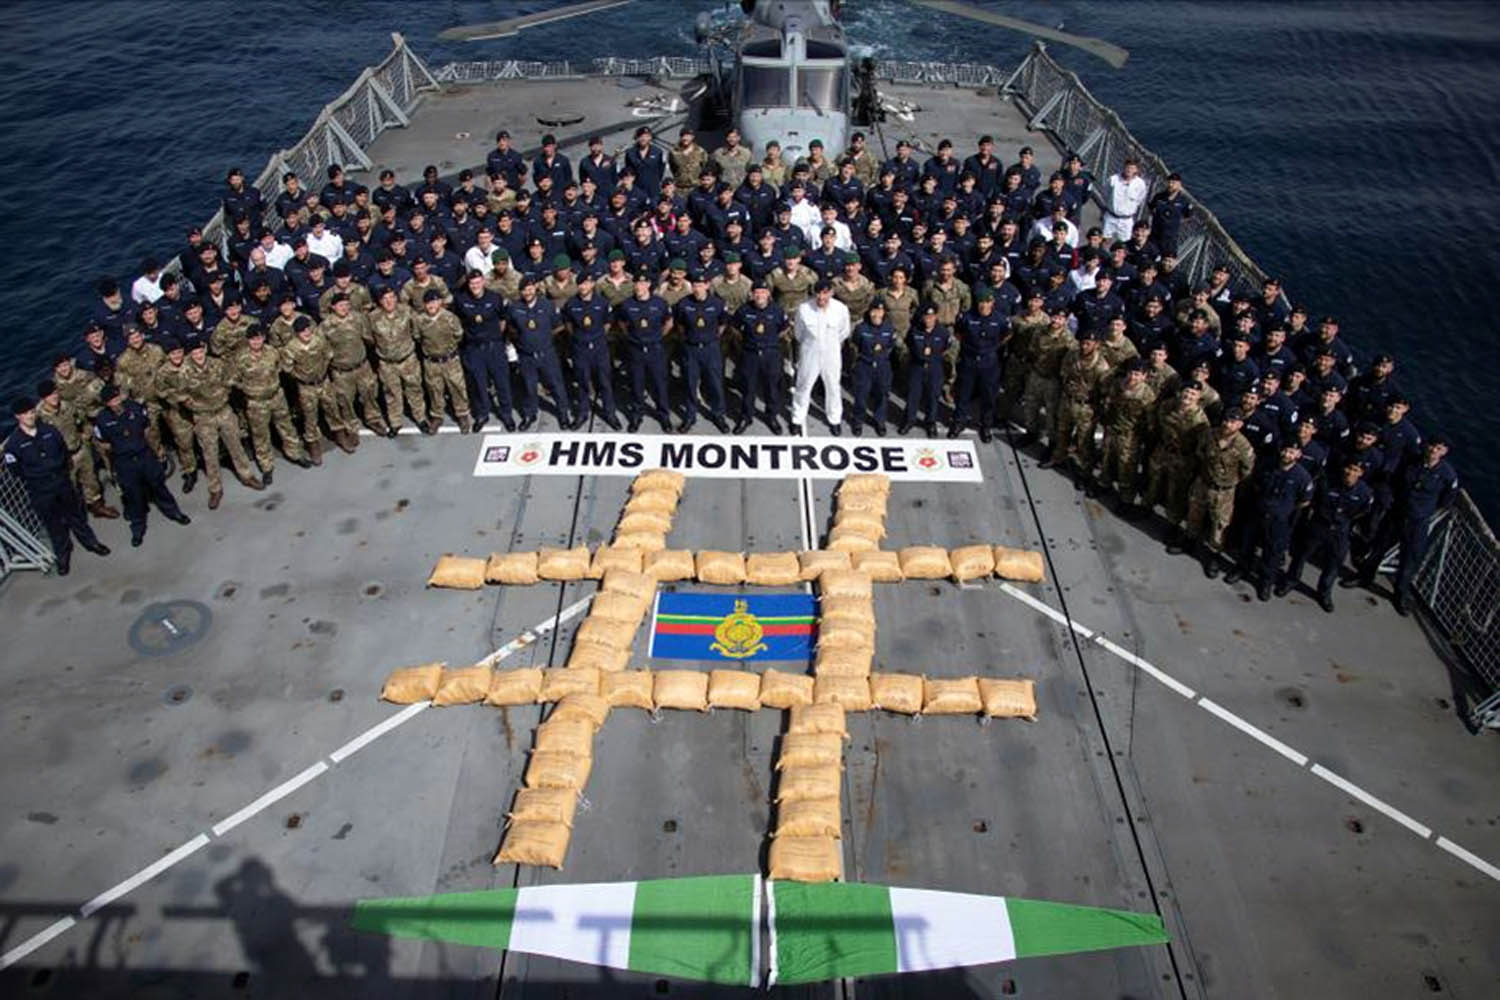 HMS Montrose crew with the massive haul of hashish.